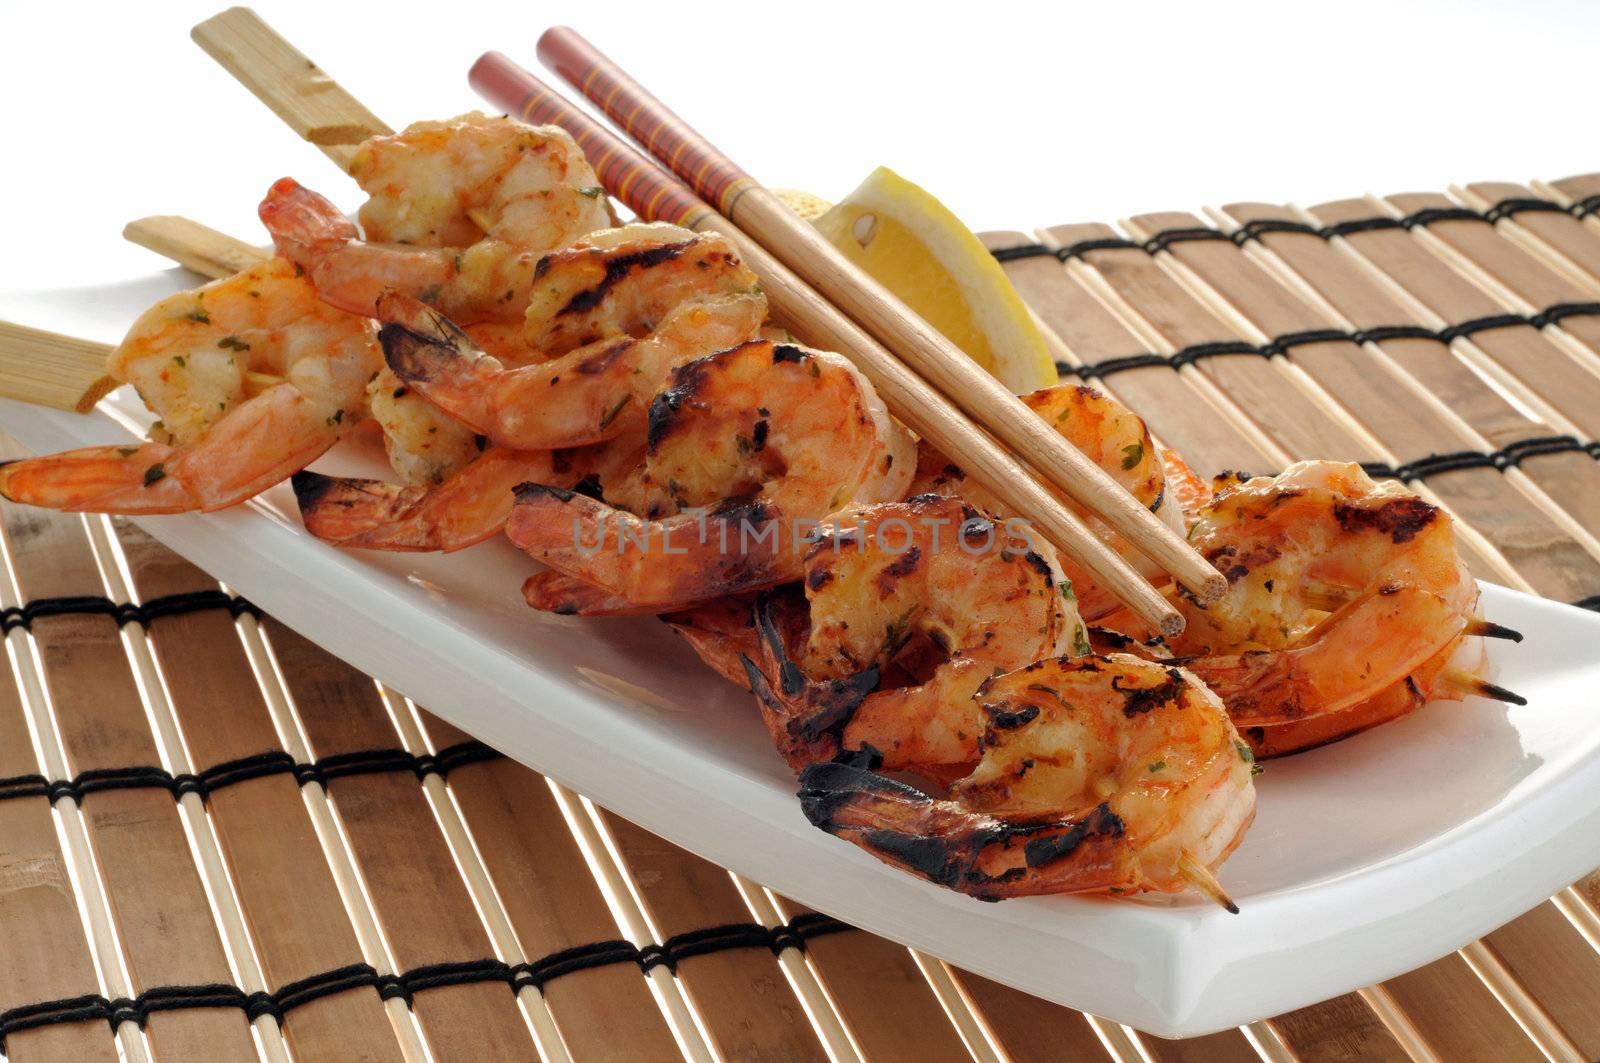 Delicious grilled shrimp served with lemon wedges.